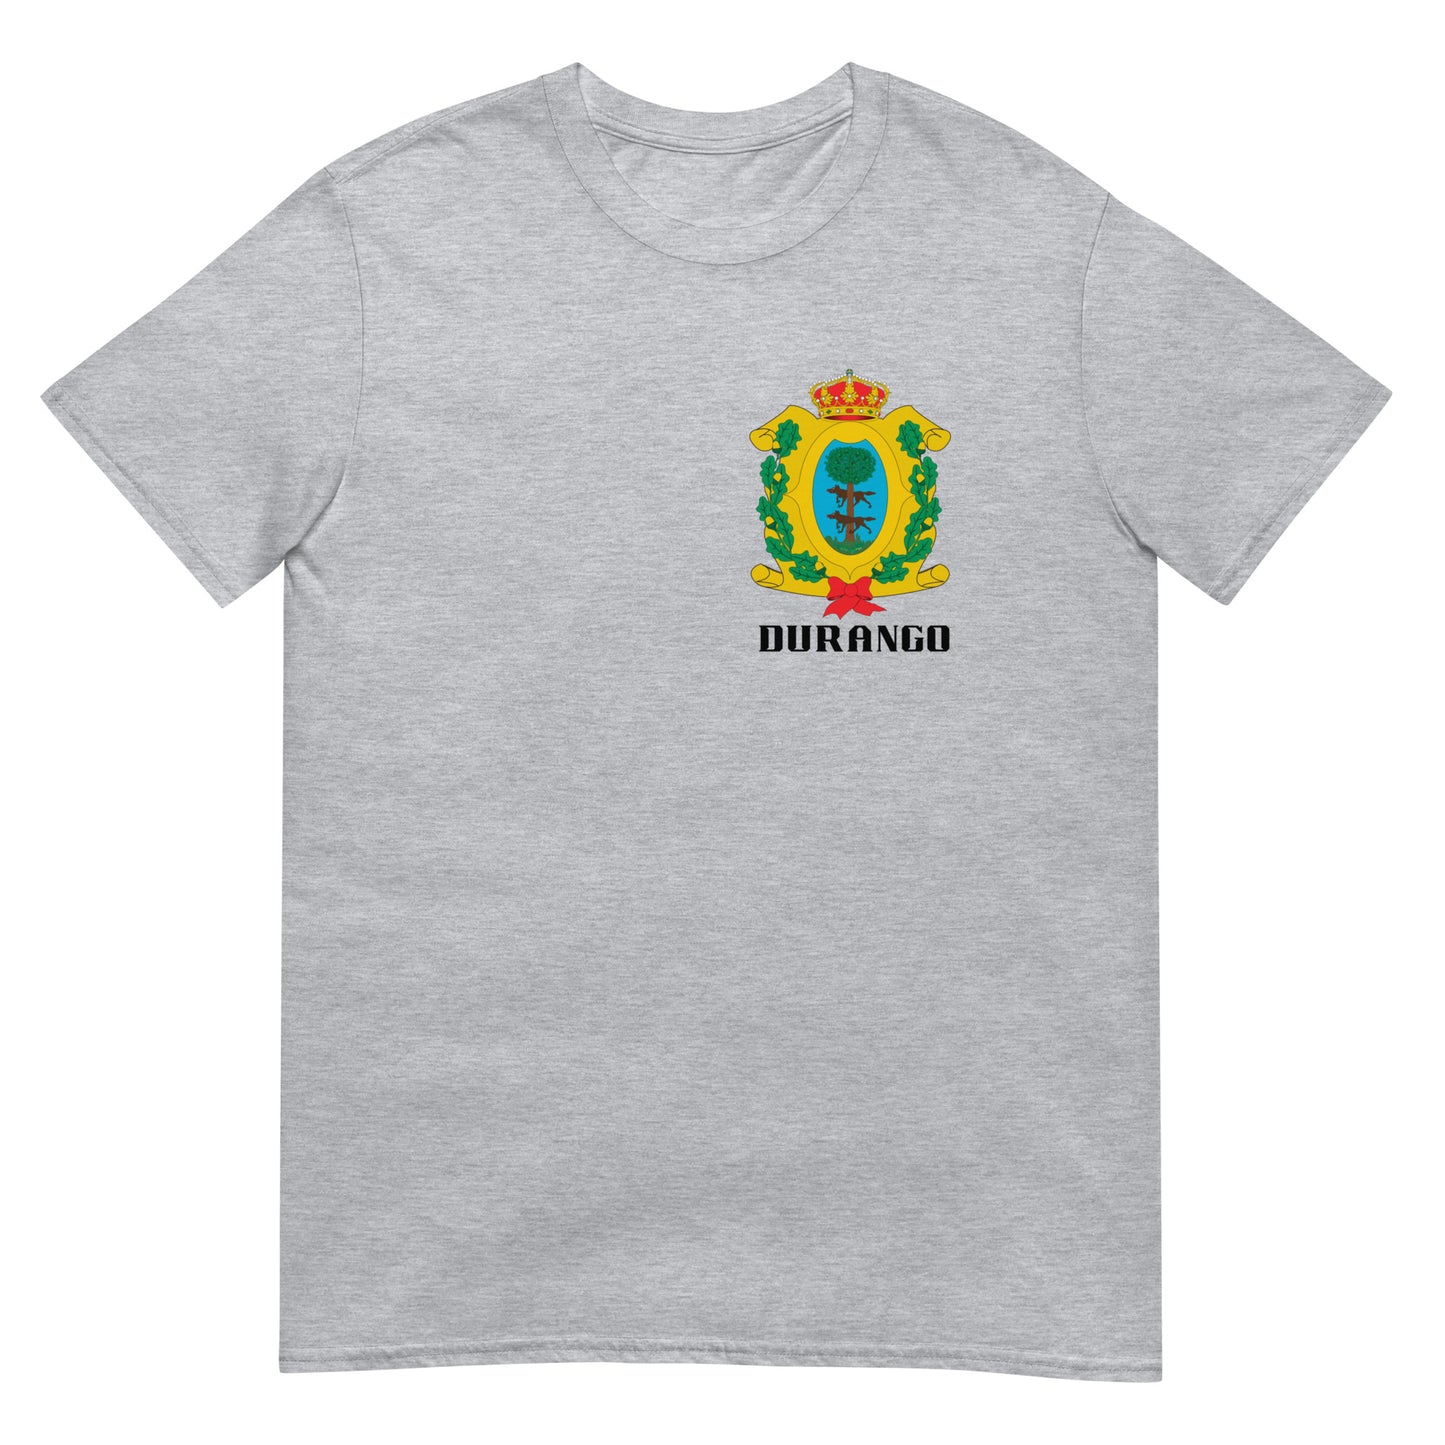 Durango- T-Shirt